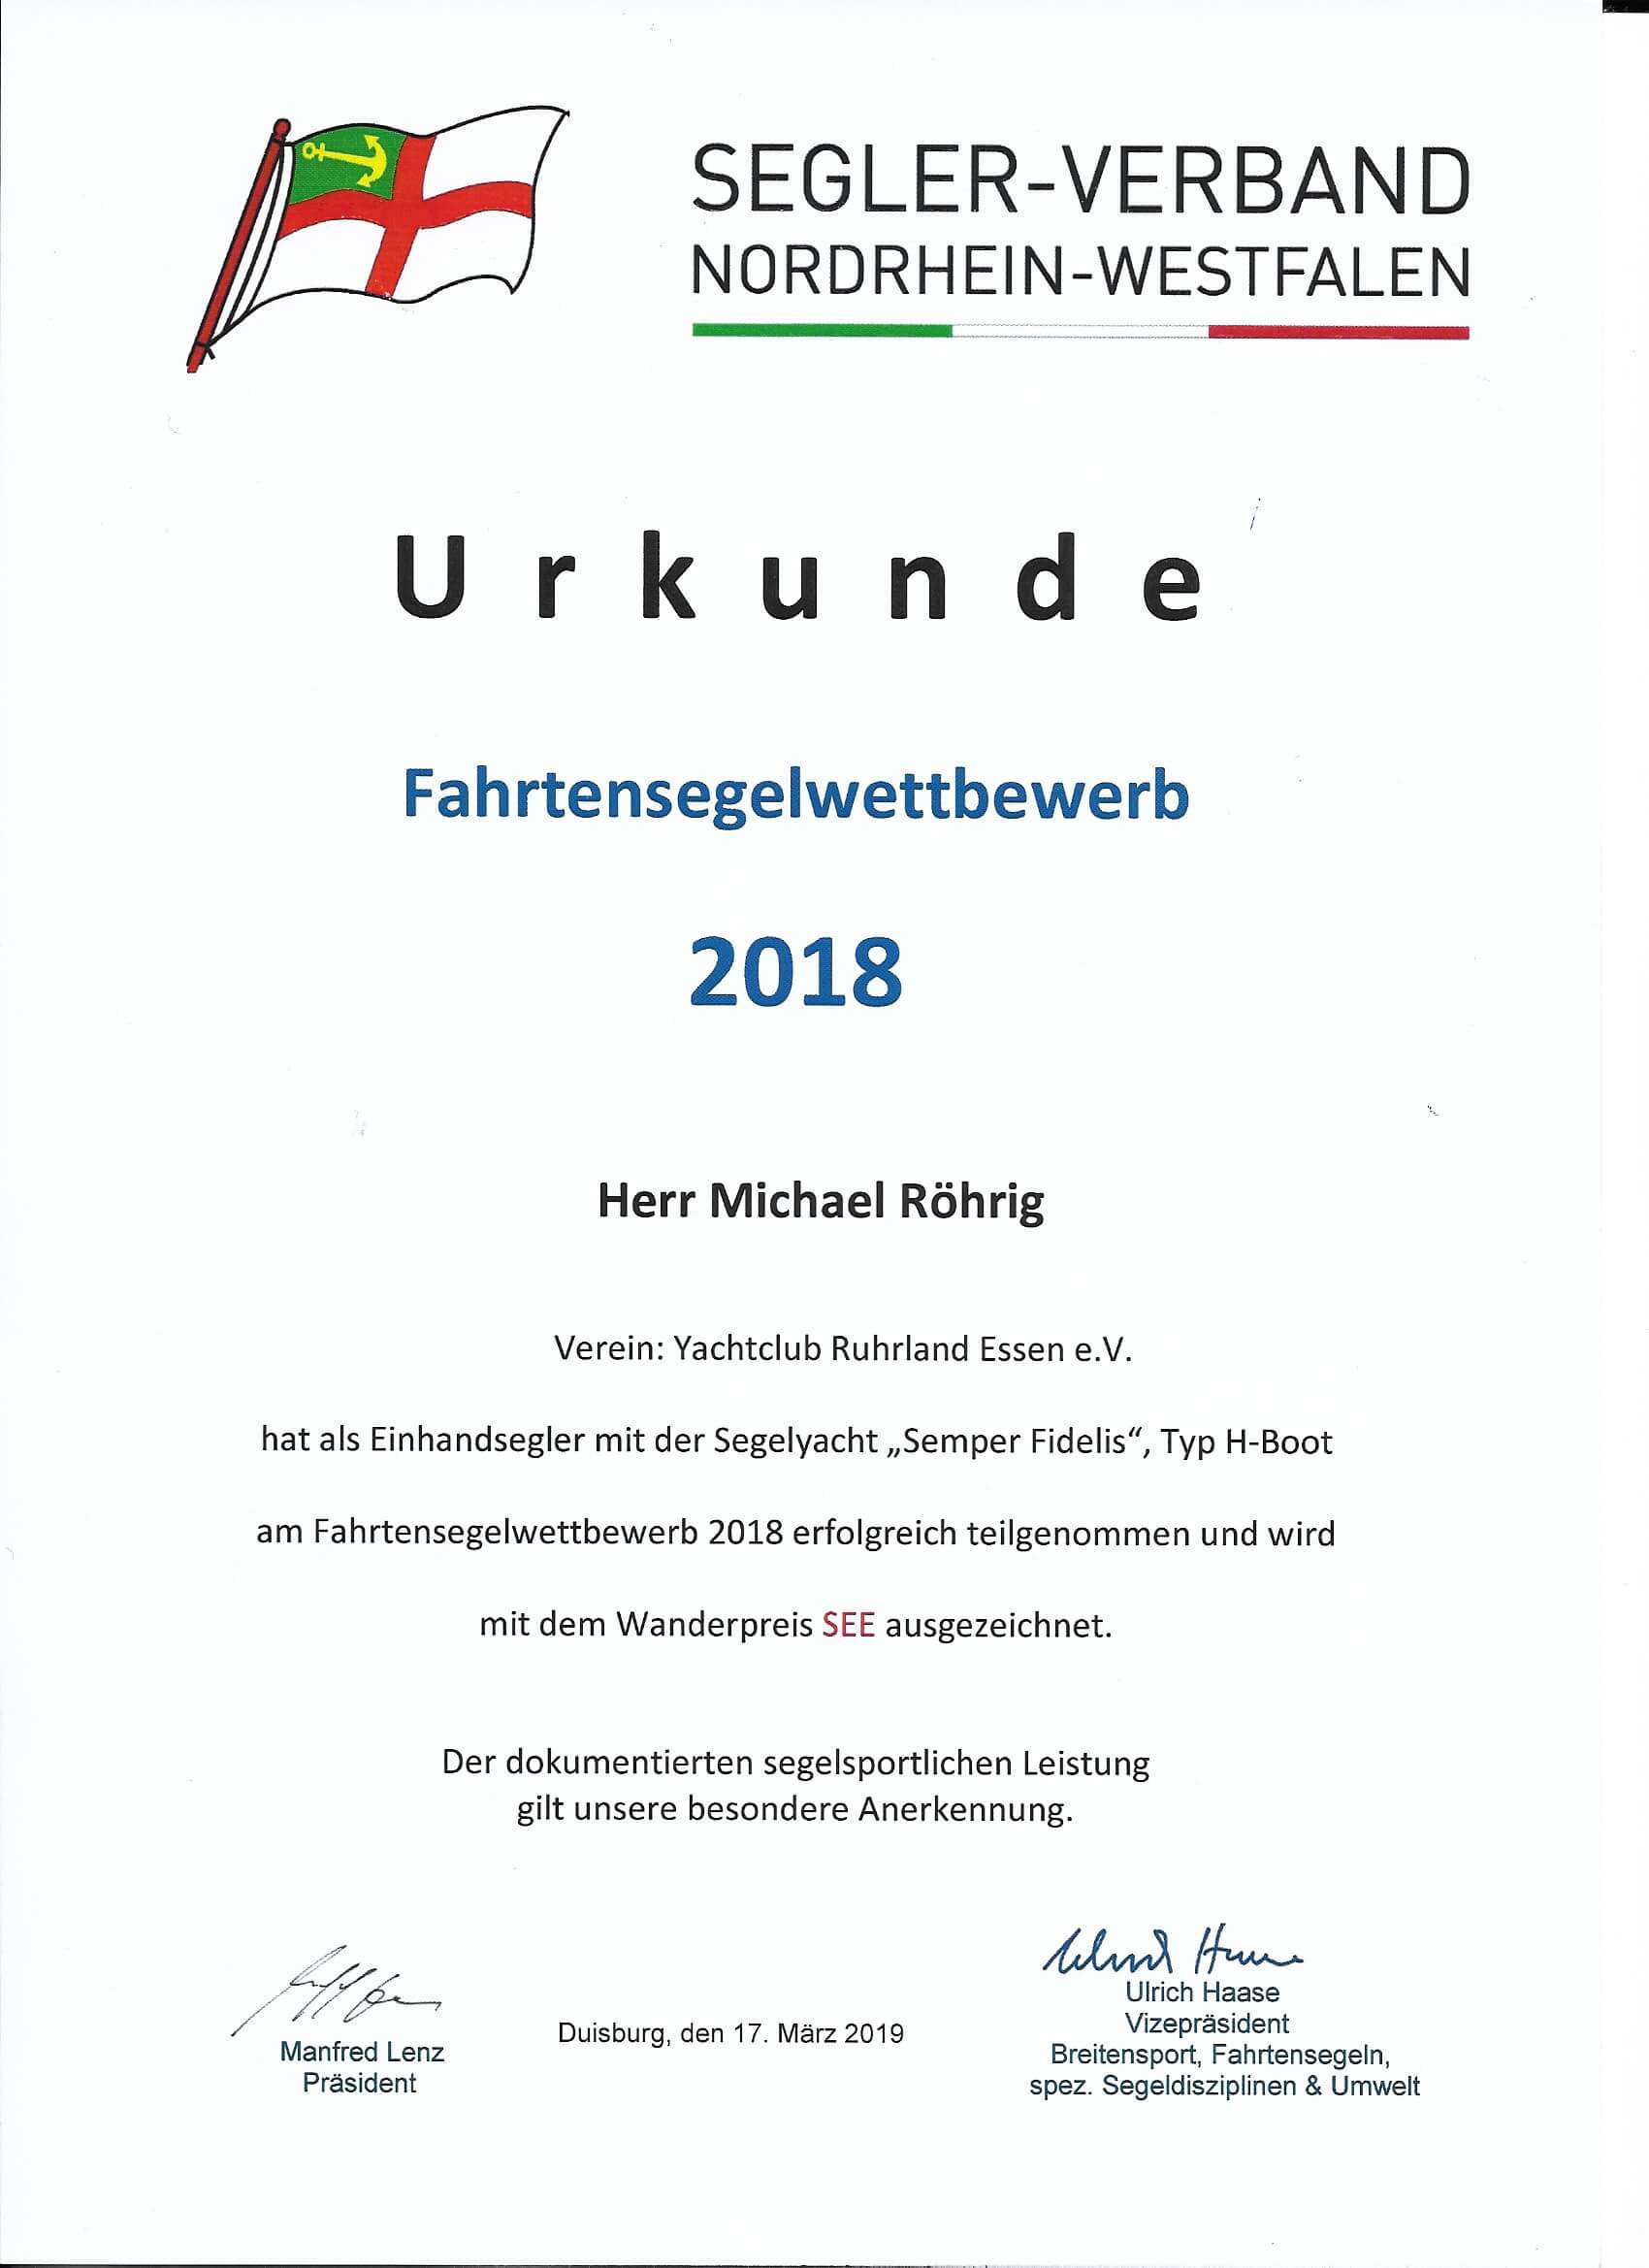 SVNRW Urkunde Fahrtensegeln 2018: Michael Röhrig